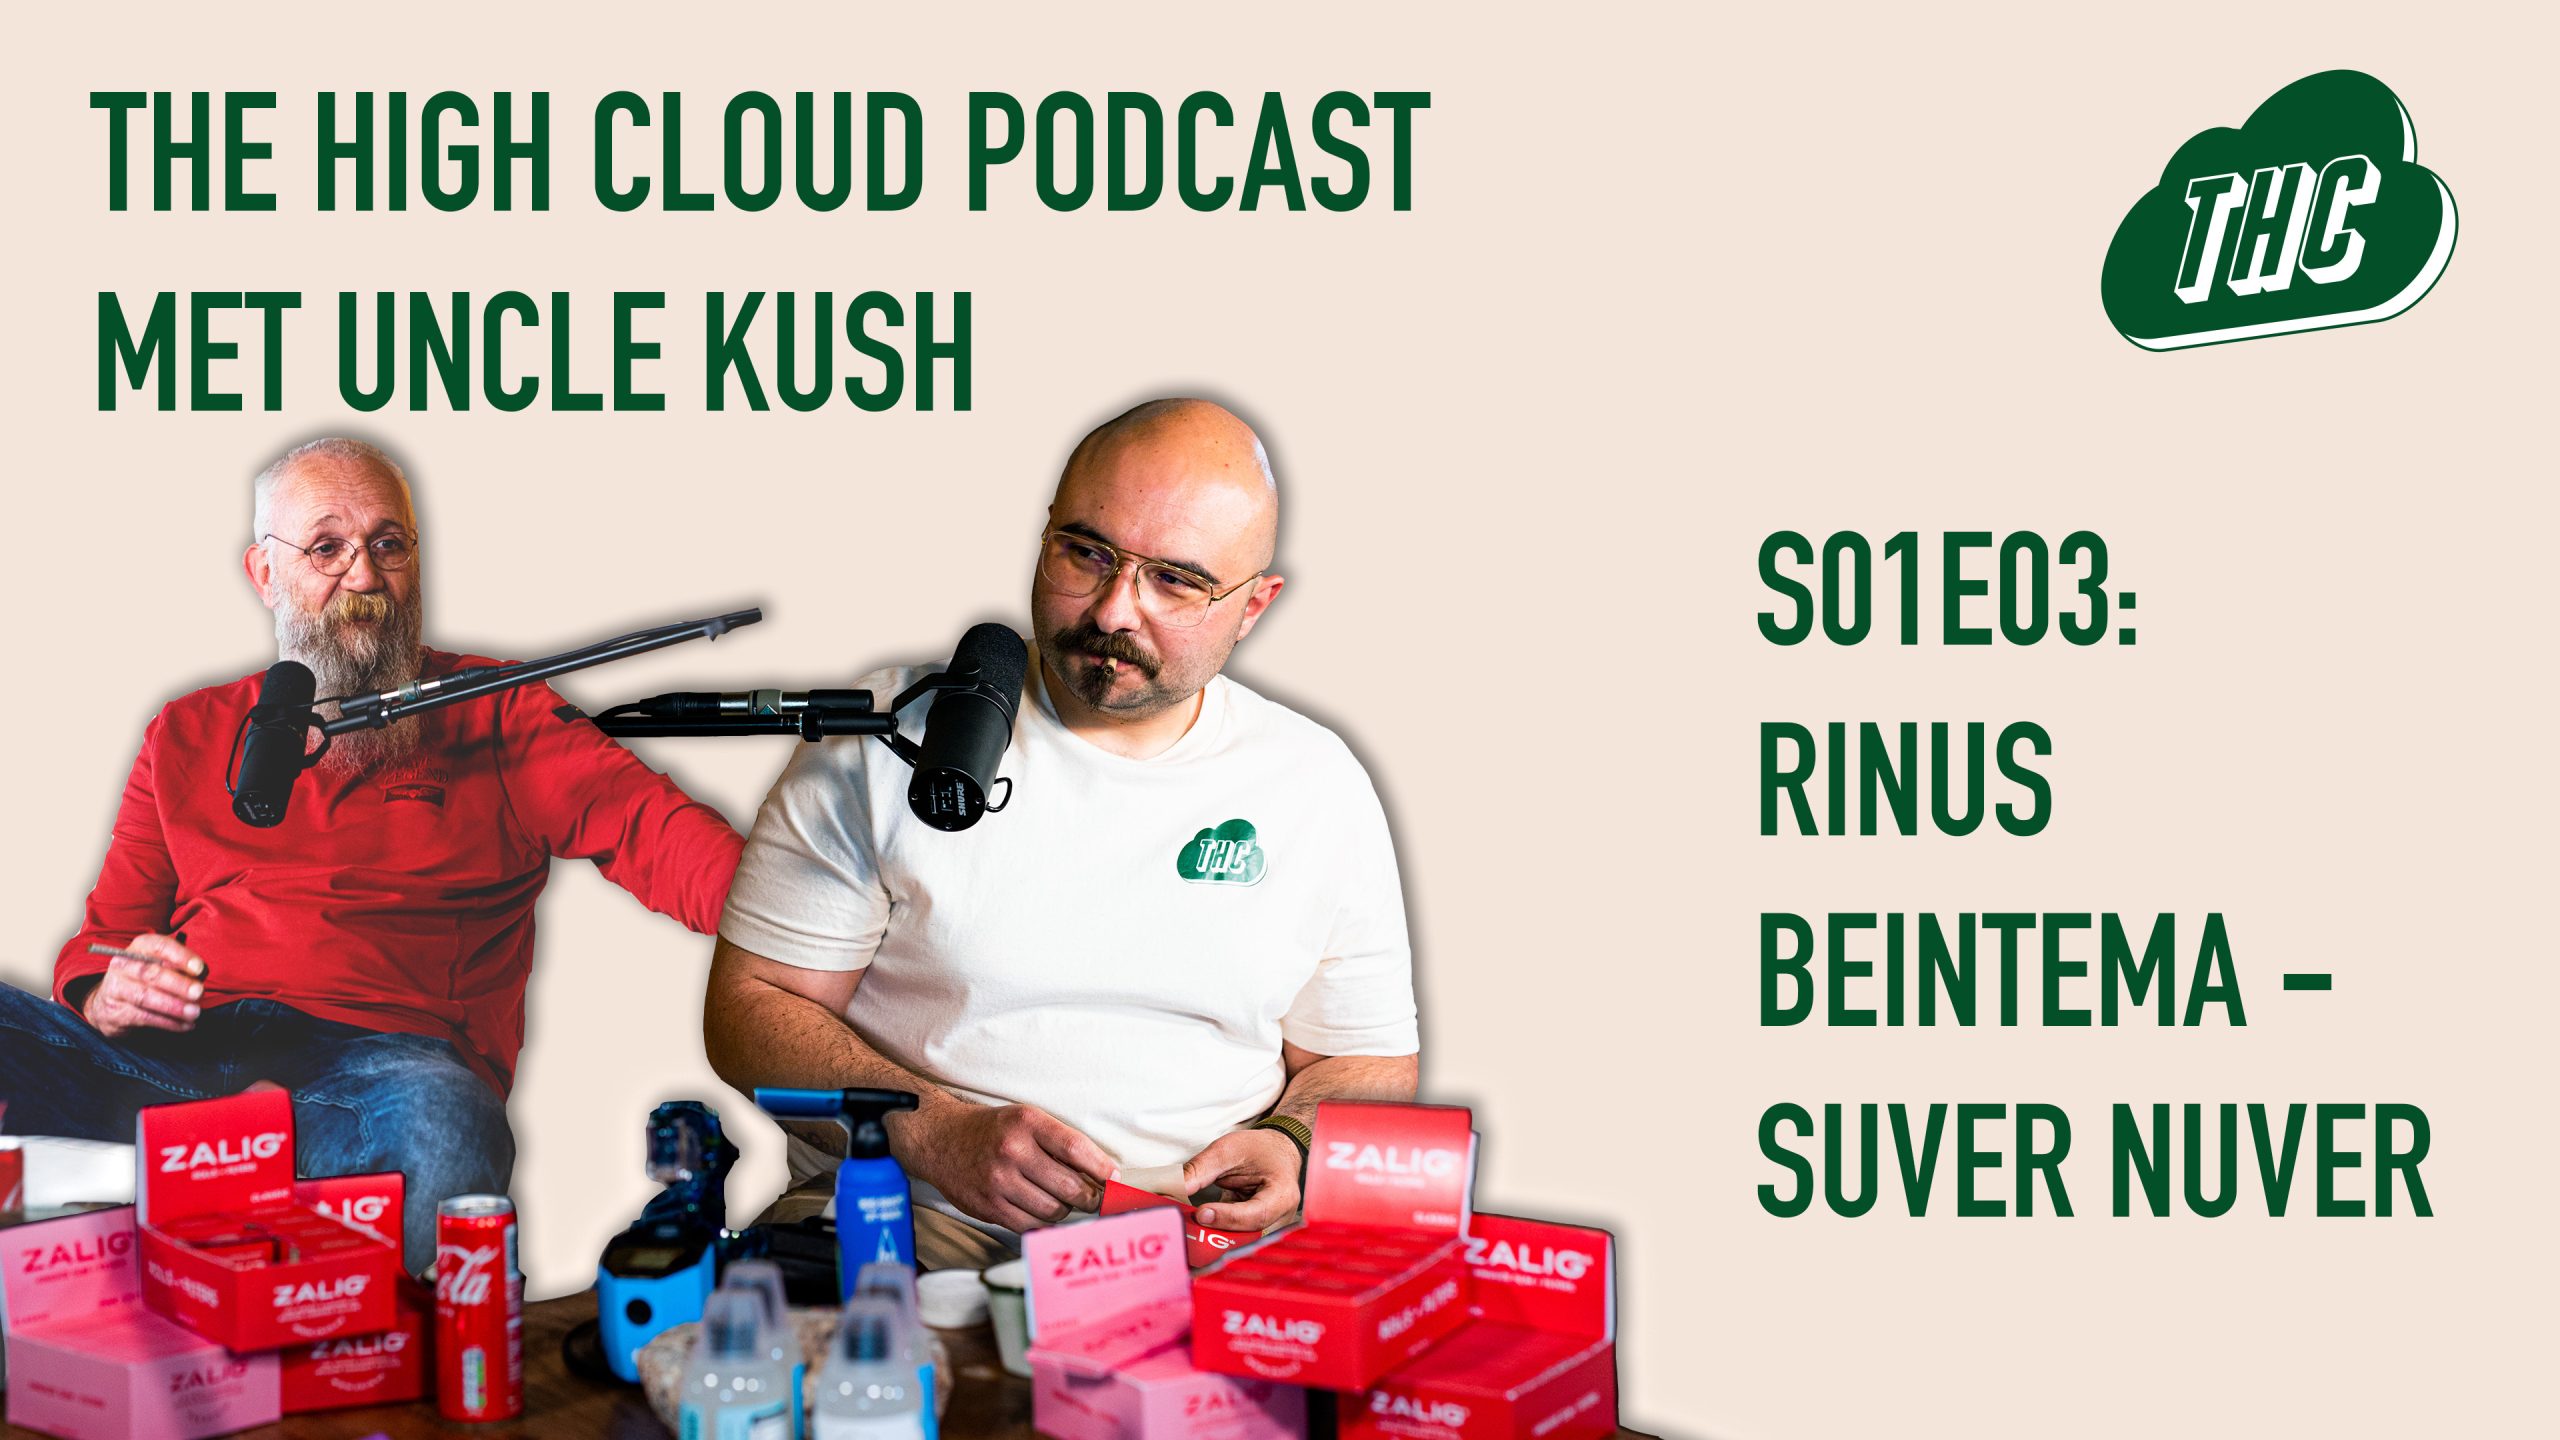 Rinus Beintema ‘Robin Hood of Cannabis’ in The High Cloud Podcast!